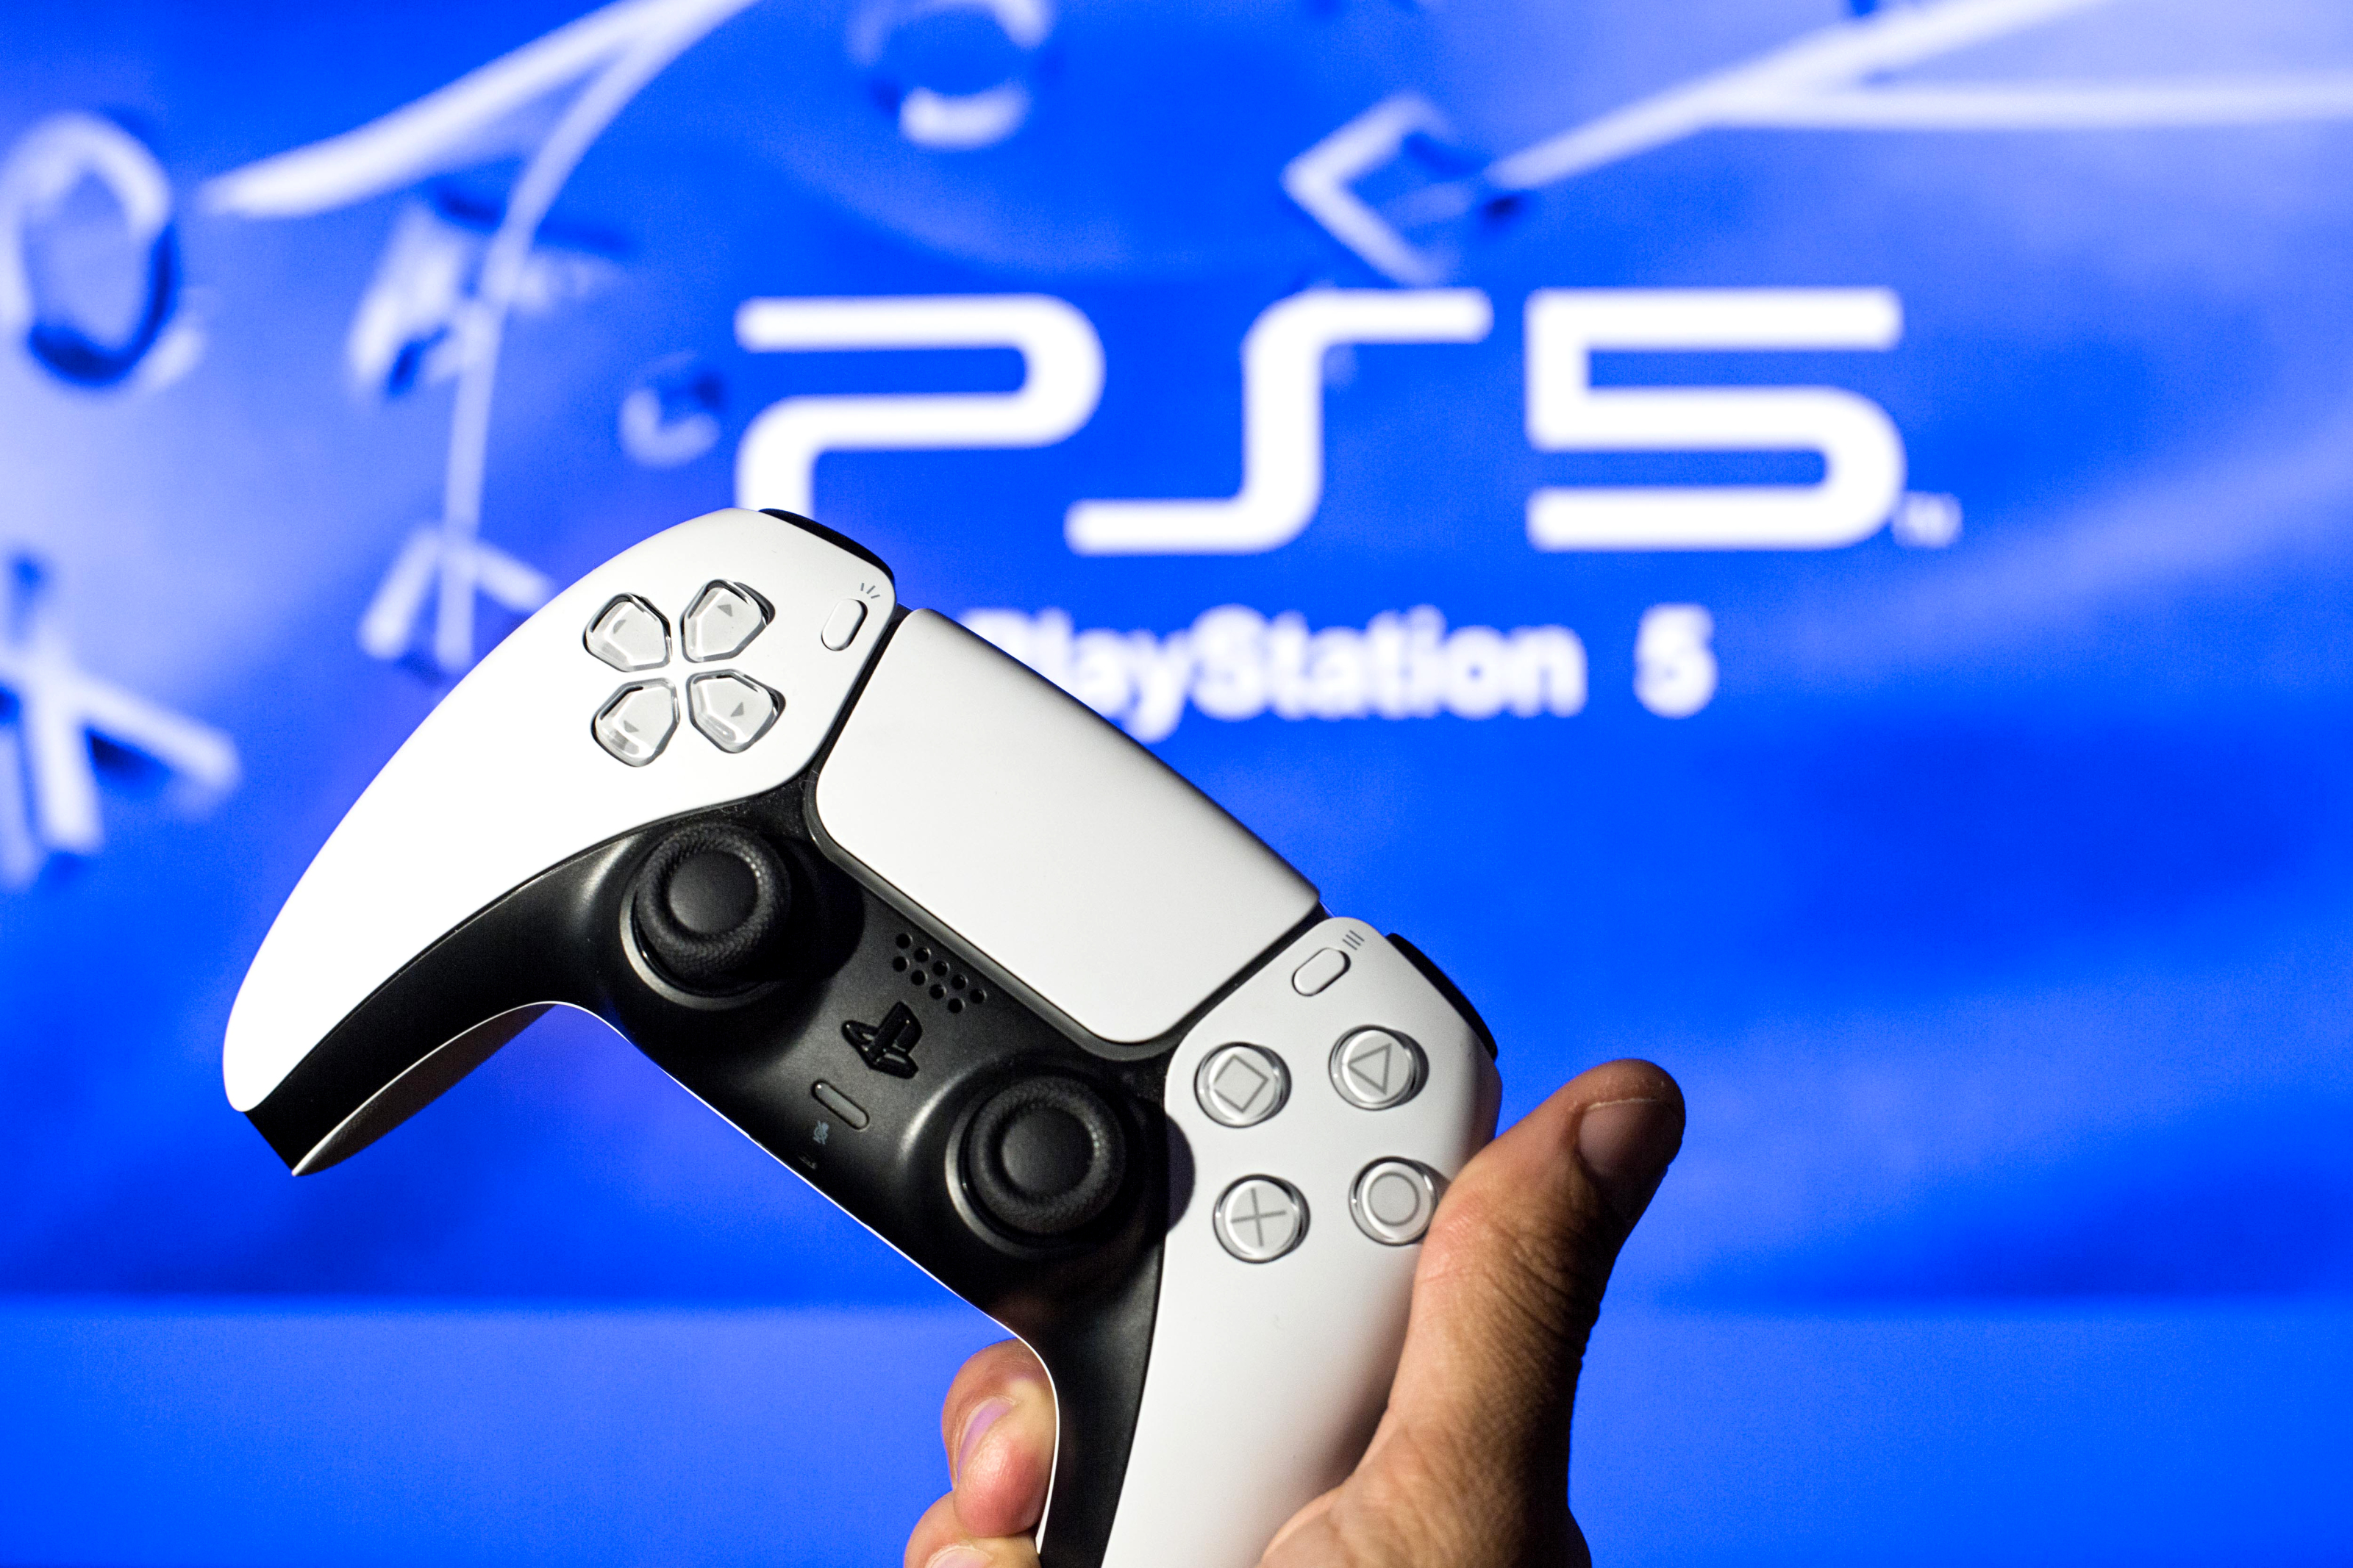 Days Gone 2 in development for PS5: Rumor or true?